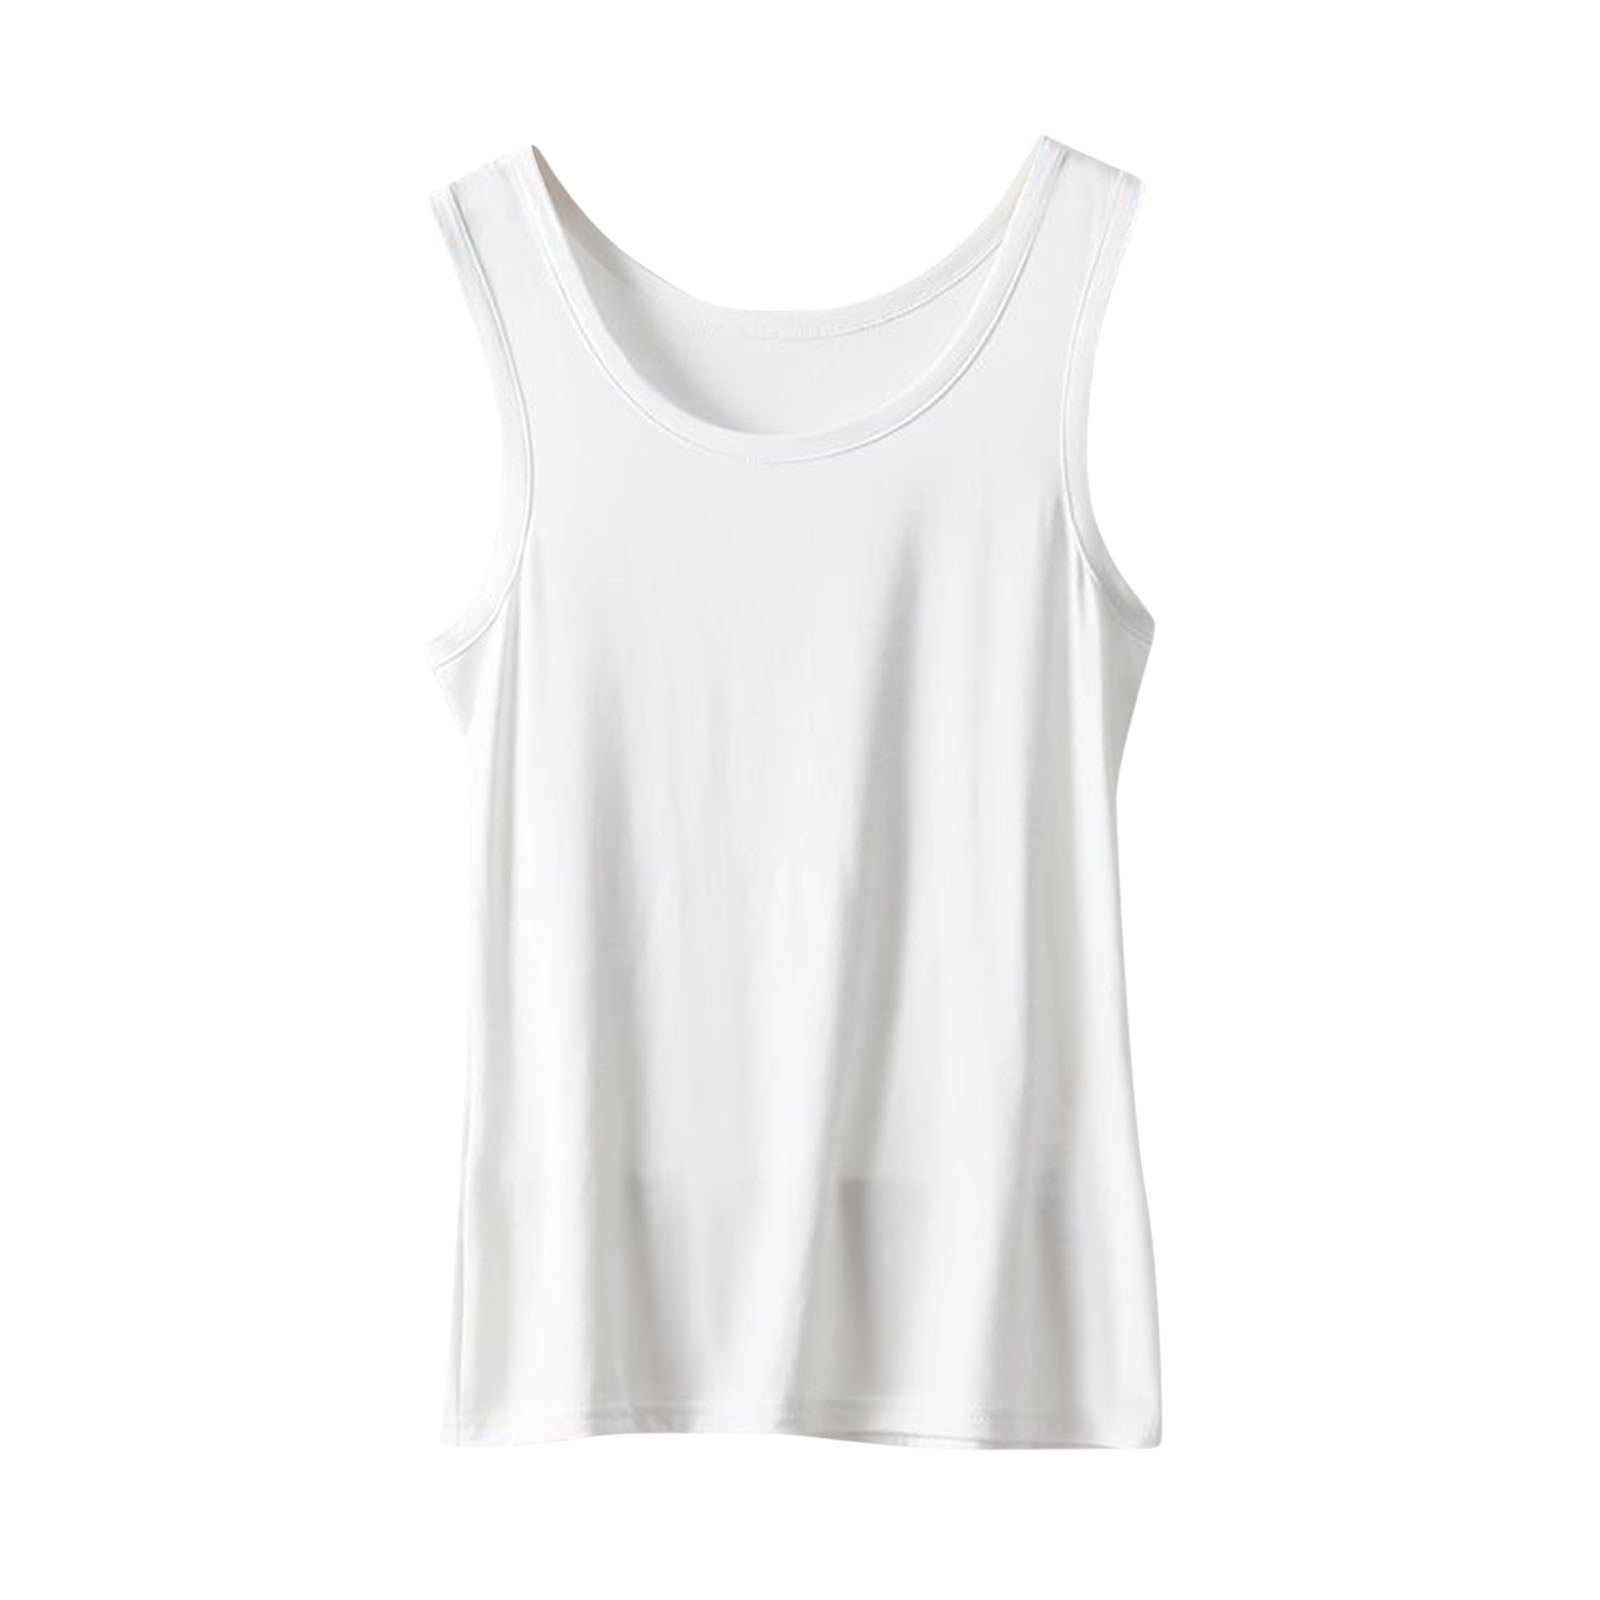 AherBiu Tank Tops for Women Cami Top Tees Shirt Sleeveless Basic Solid ...